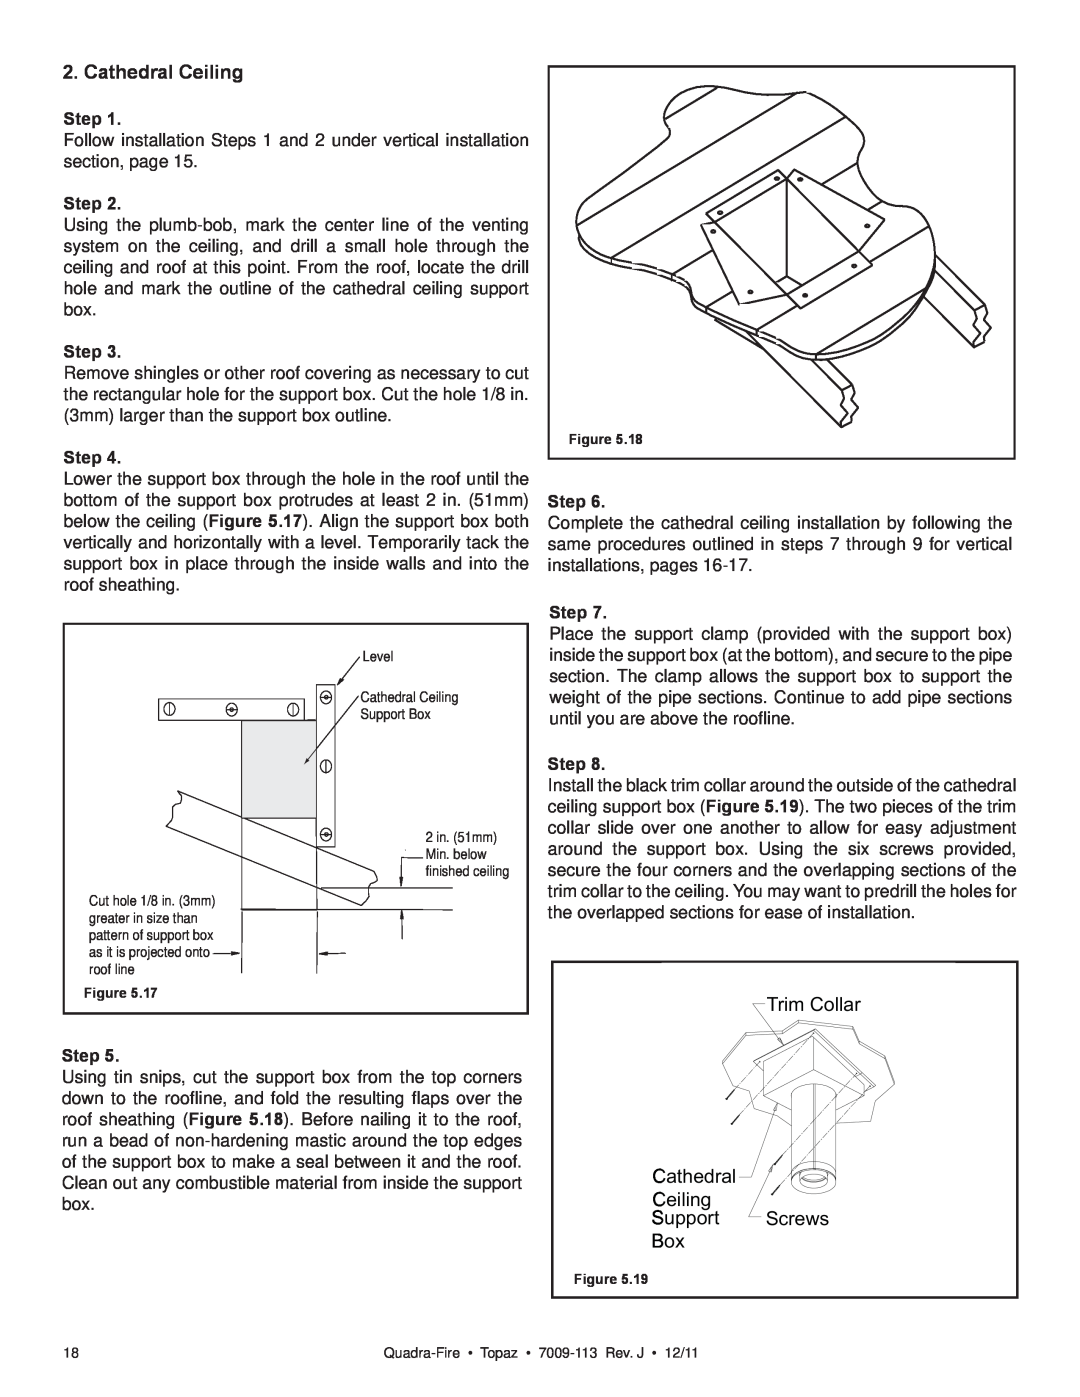 OmniTek 839-1290, 839-1320, 839-1340 owner manual Trim Collar Cathedral Ceiling Support Screws Box, Step 